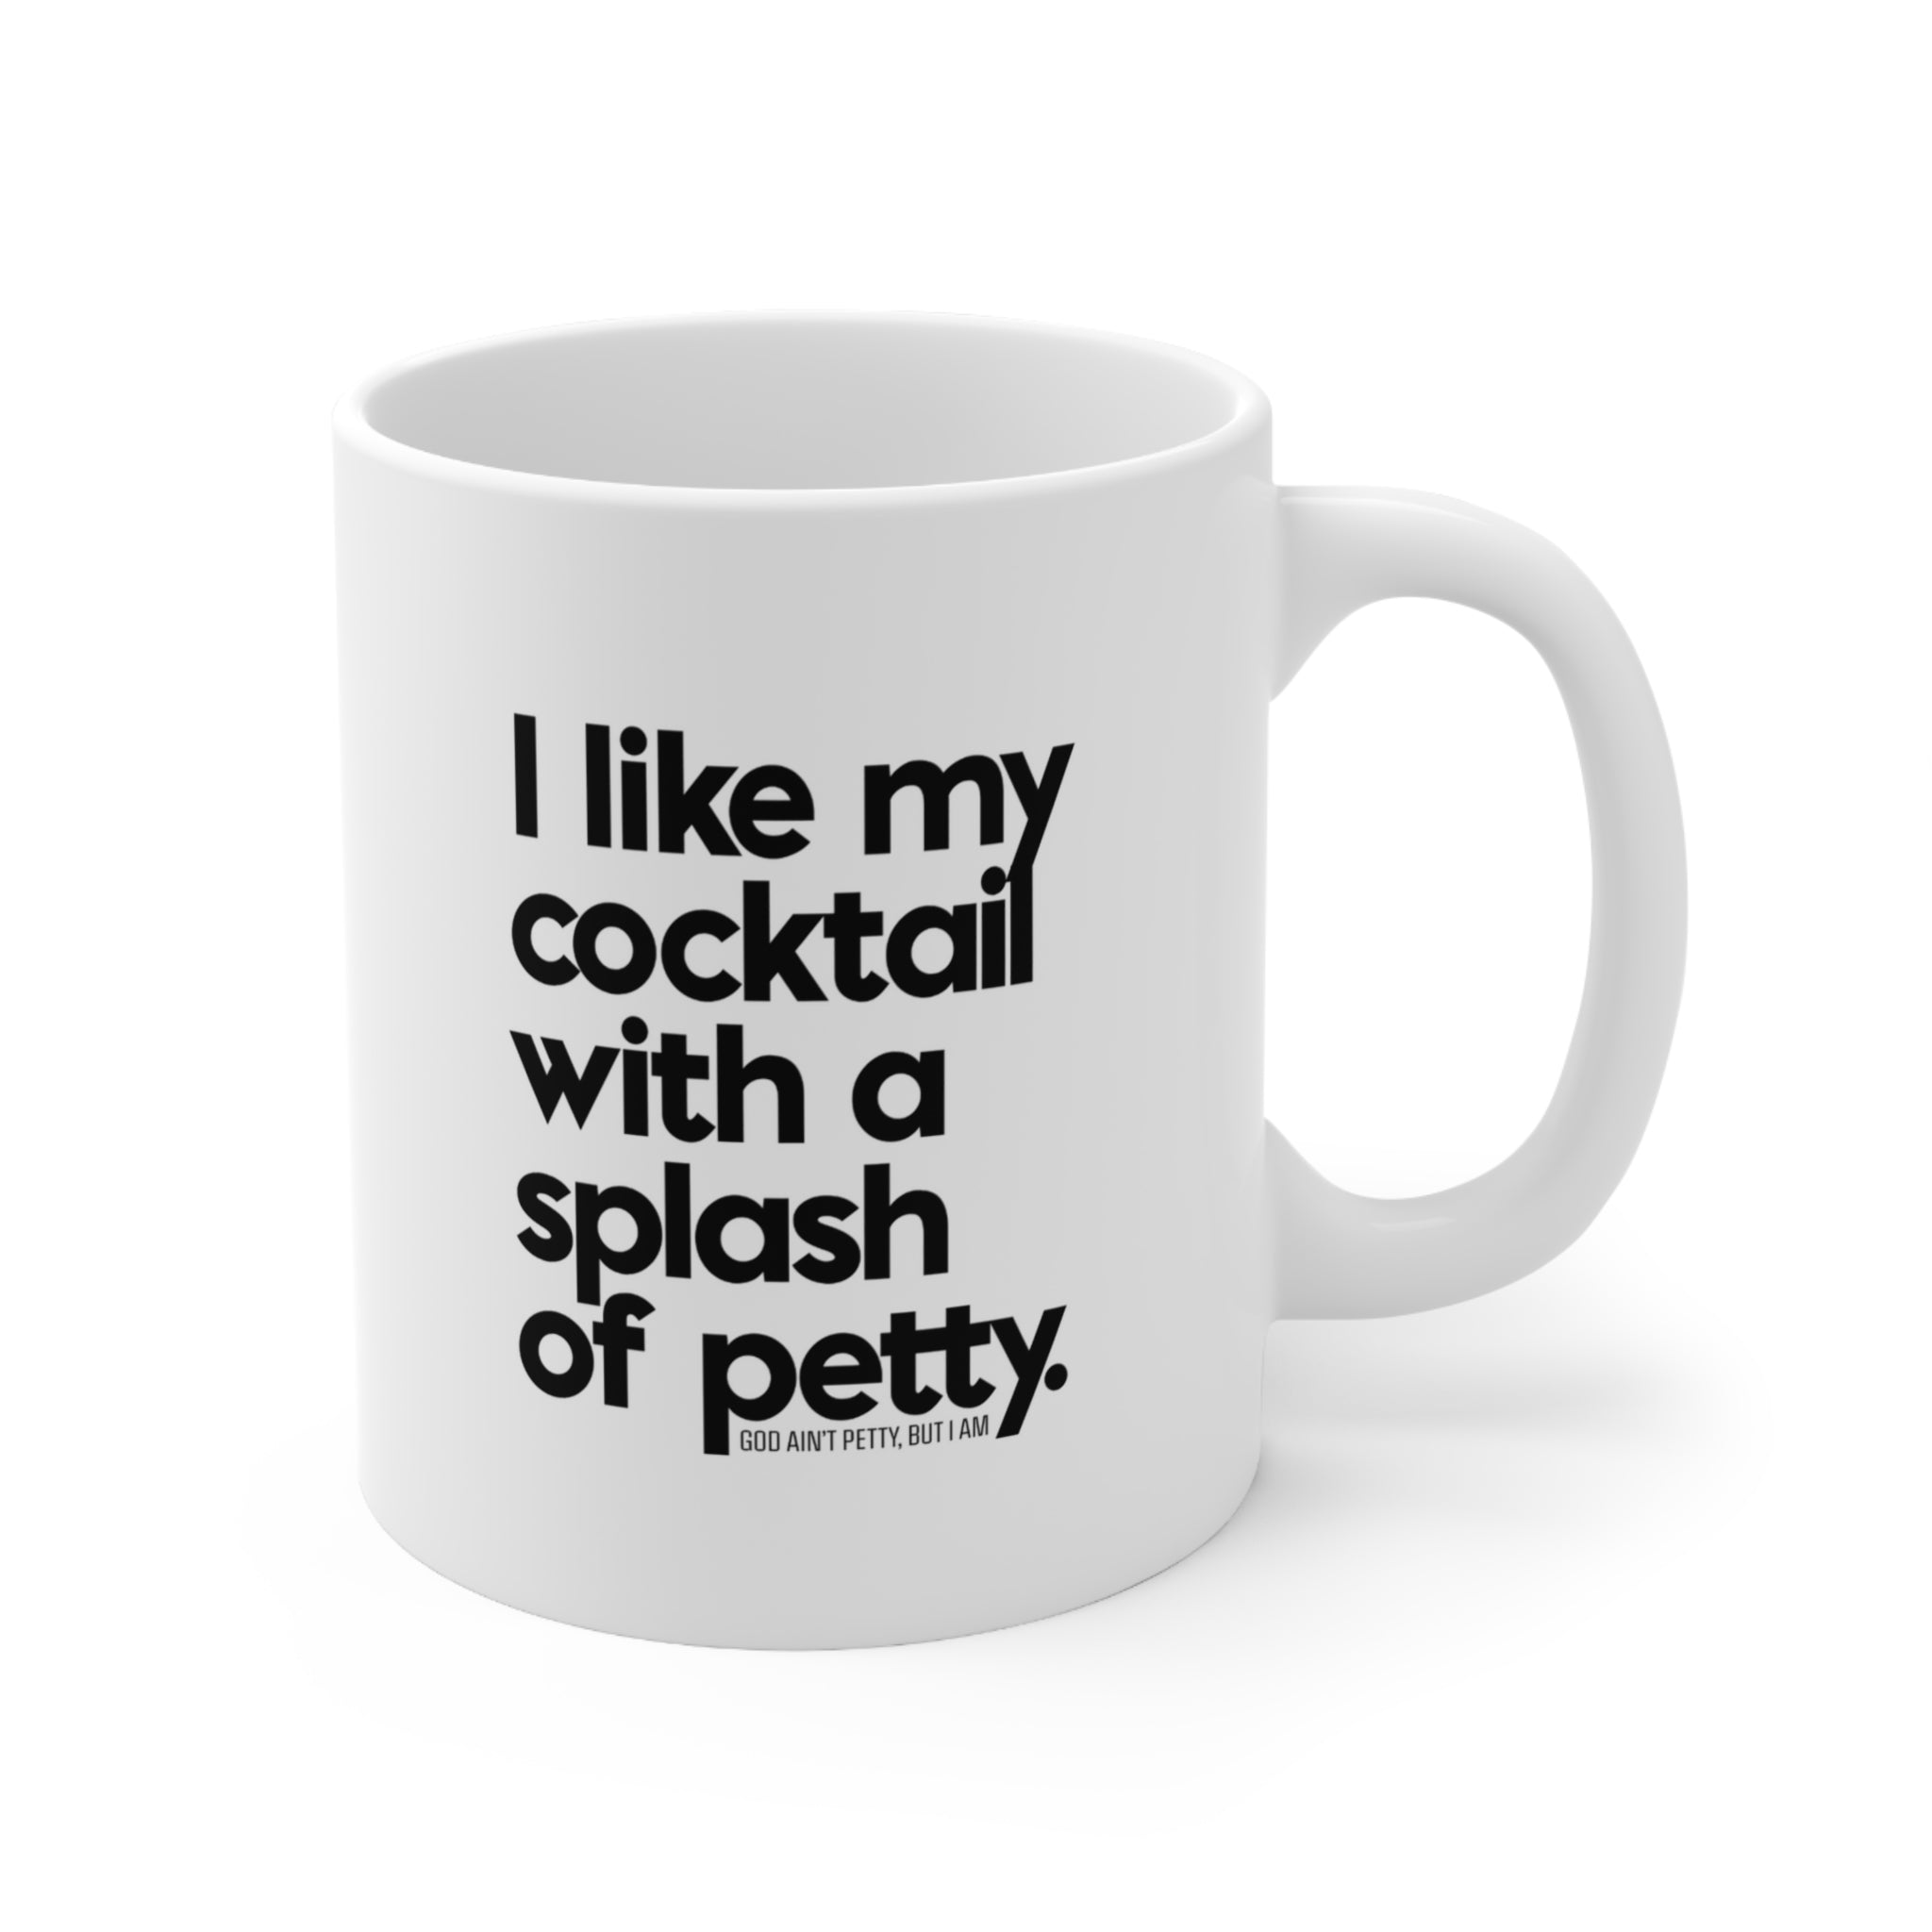 I like my cocktail with a splash of petty Mug 11oz (White/Black)-Mug-The Original God Ain't Petty But I Am